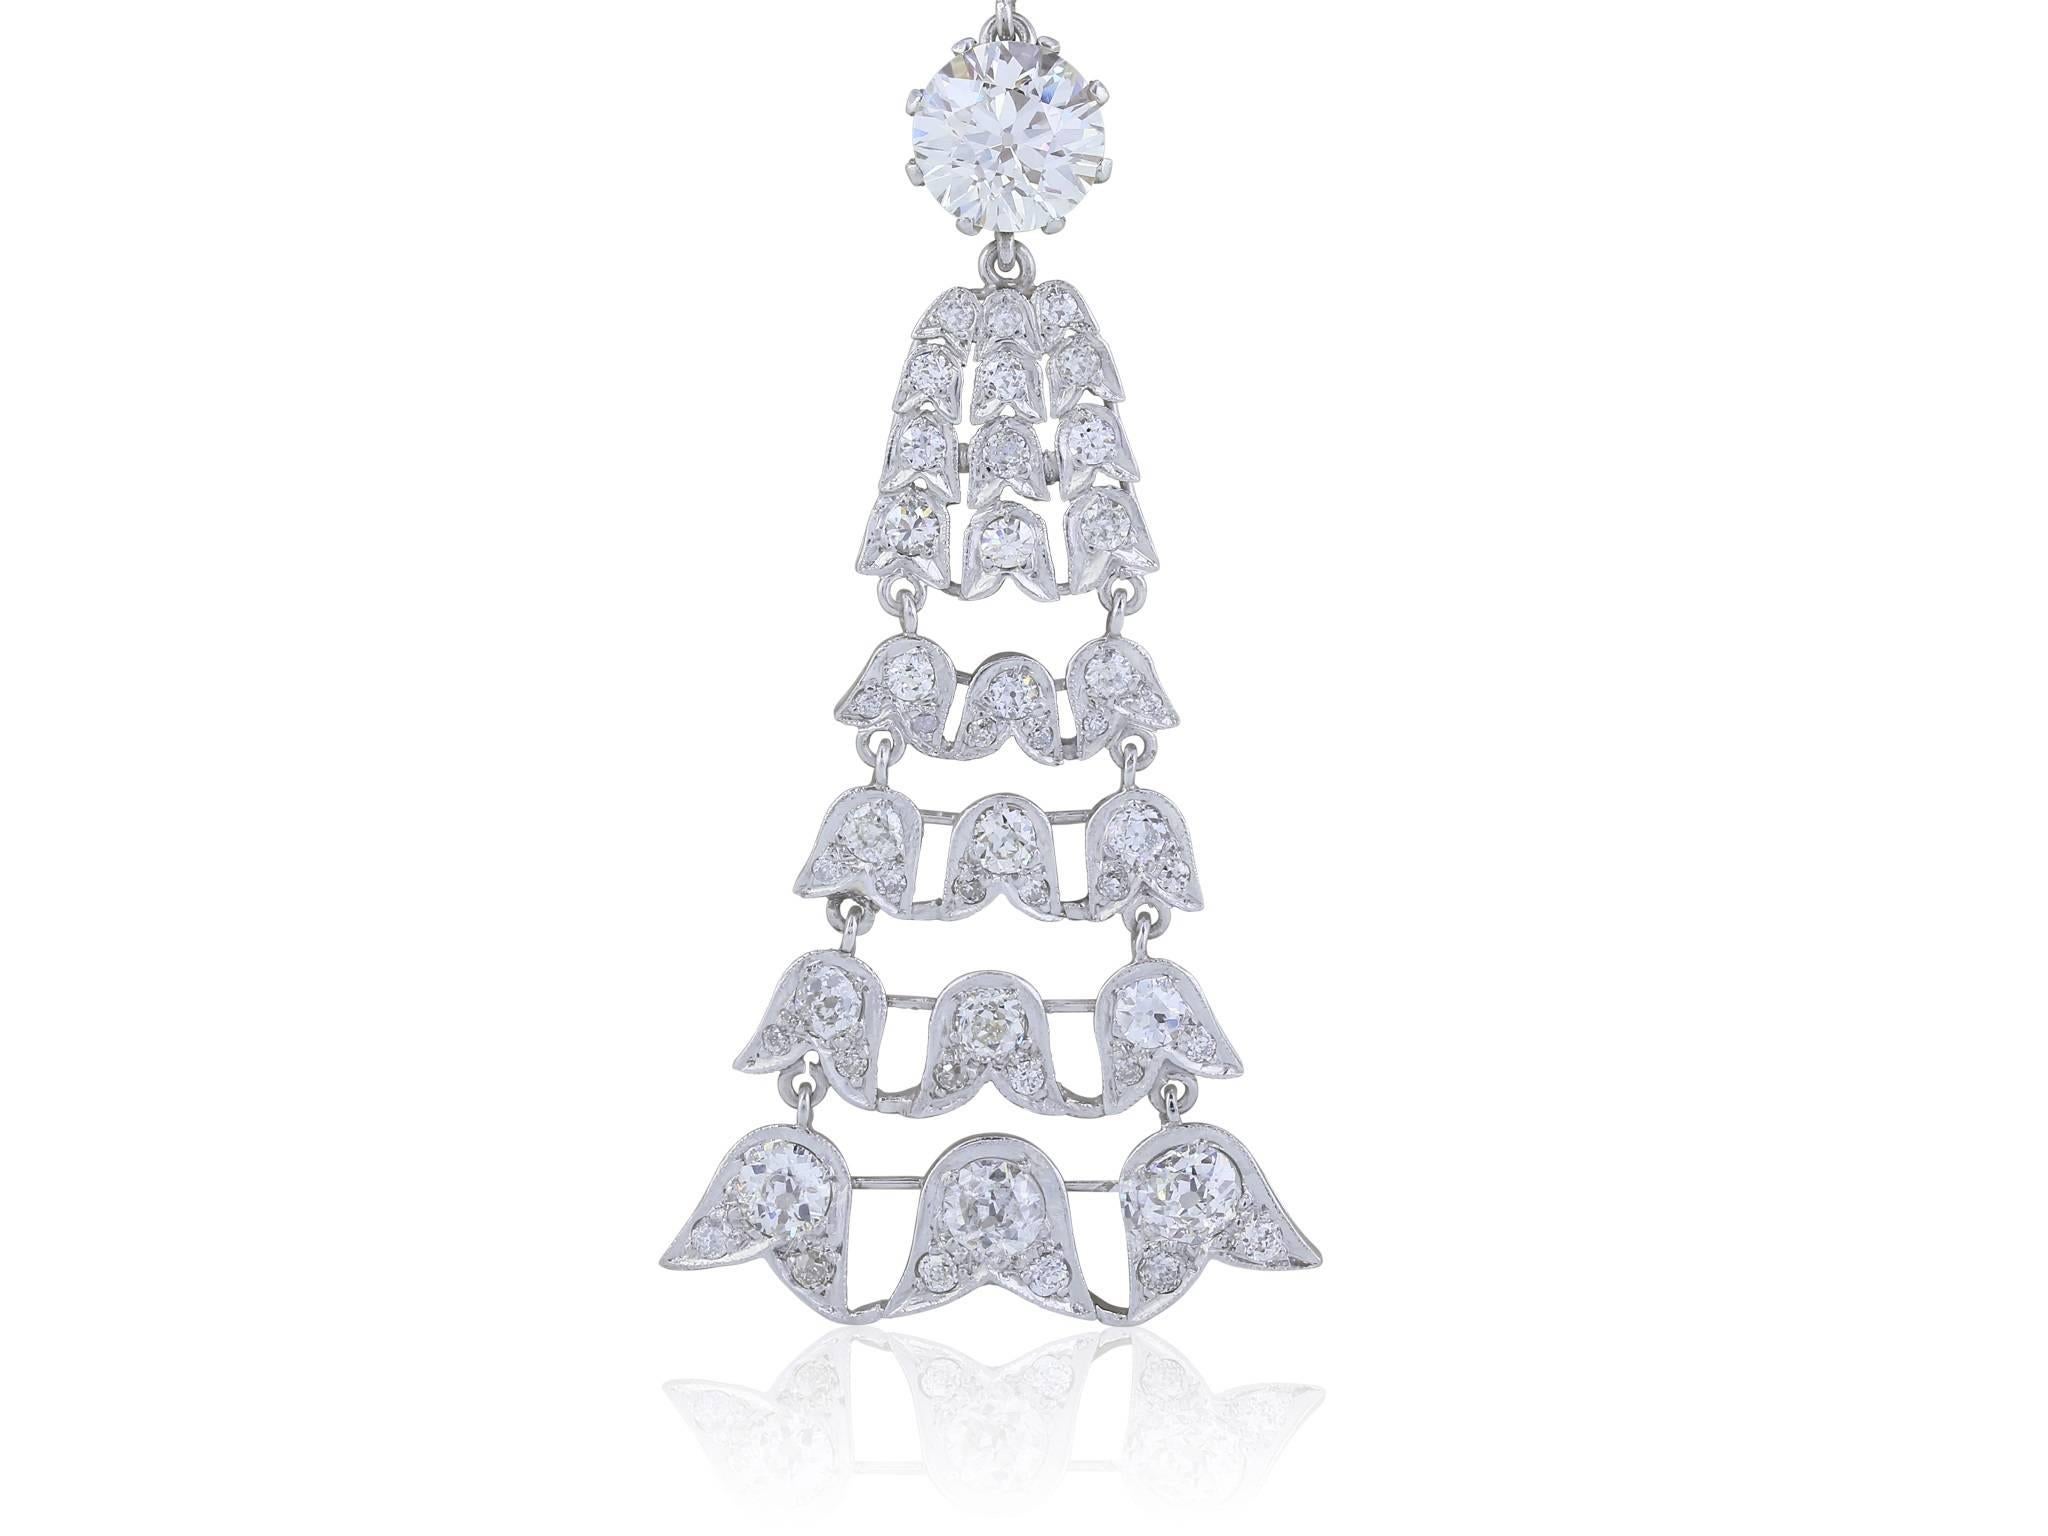 Platinum Edwardian open work sautoir diamond necklace consisting of approximately 45 carats total weight of Old European Cut diamonds